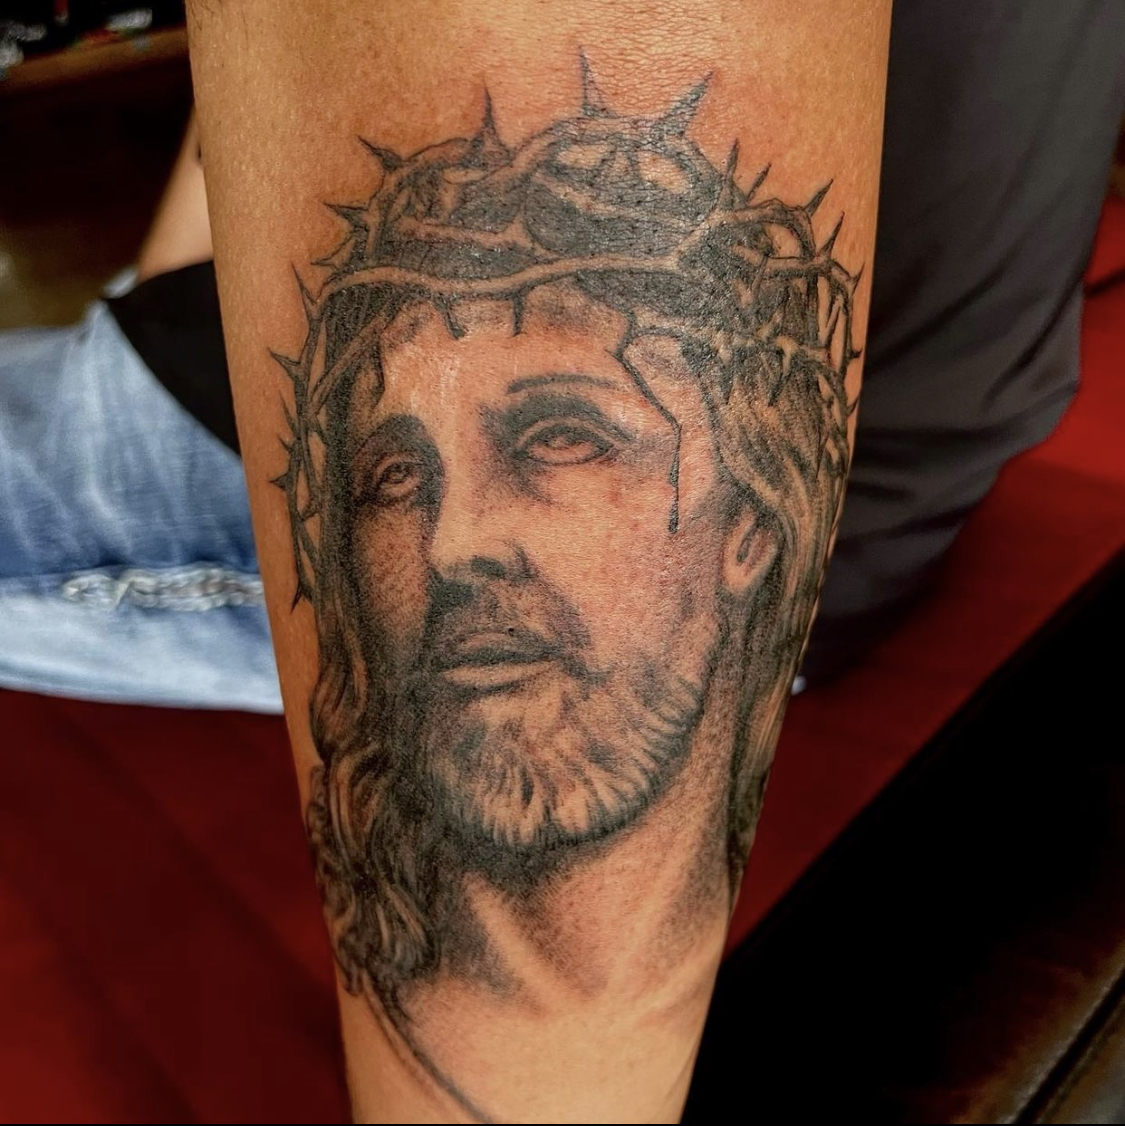 Tattoo of Jesus from top tattoo artists in dallas